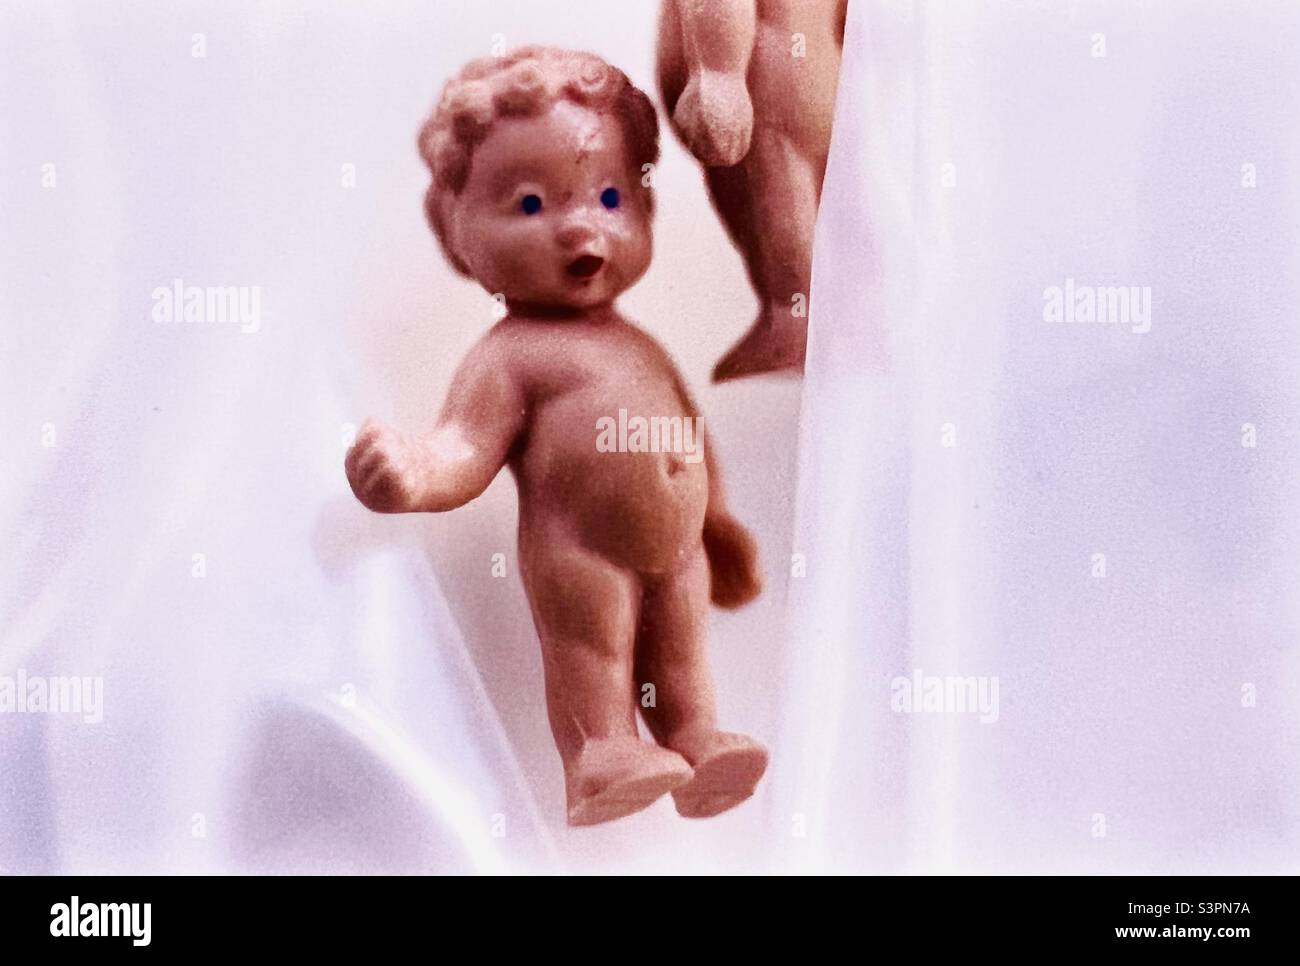 Tiny Vintage baby dolls Stock Photo